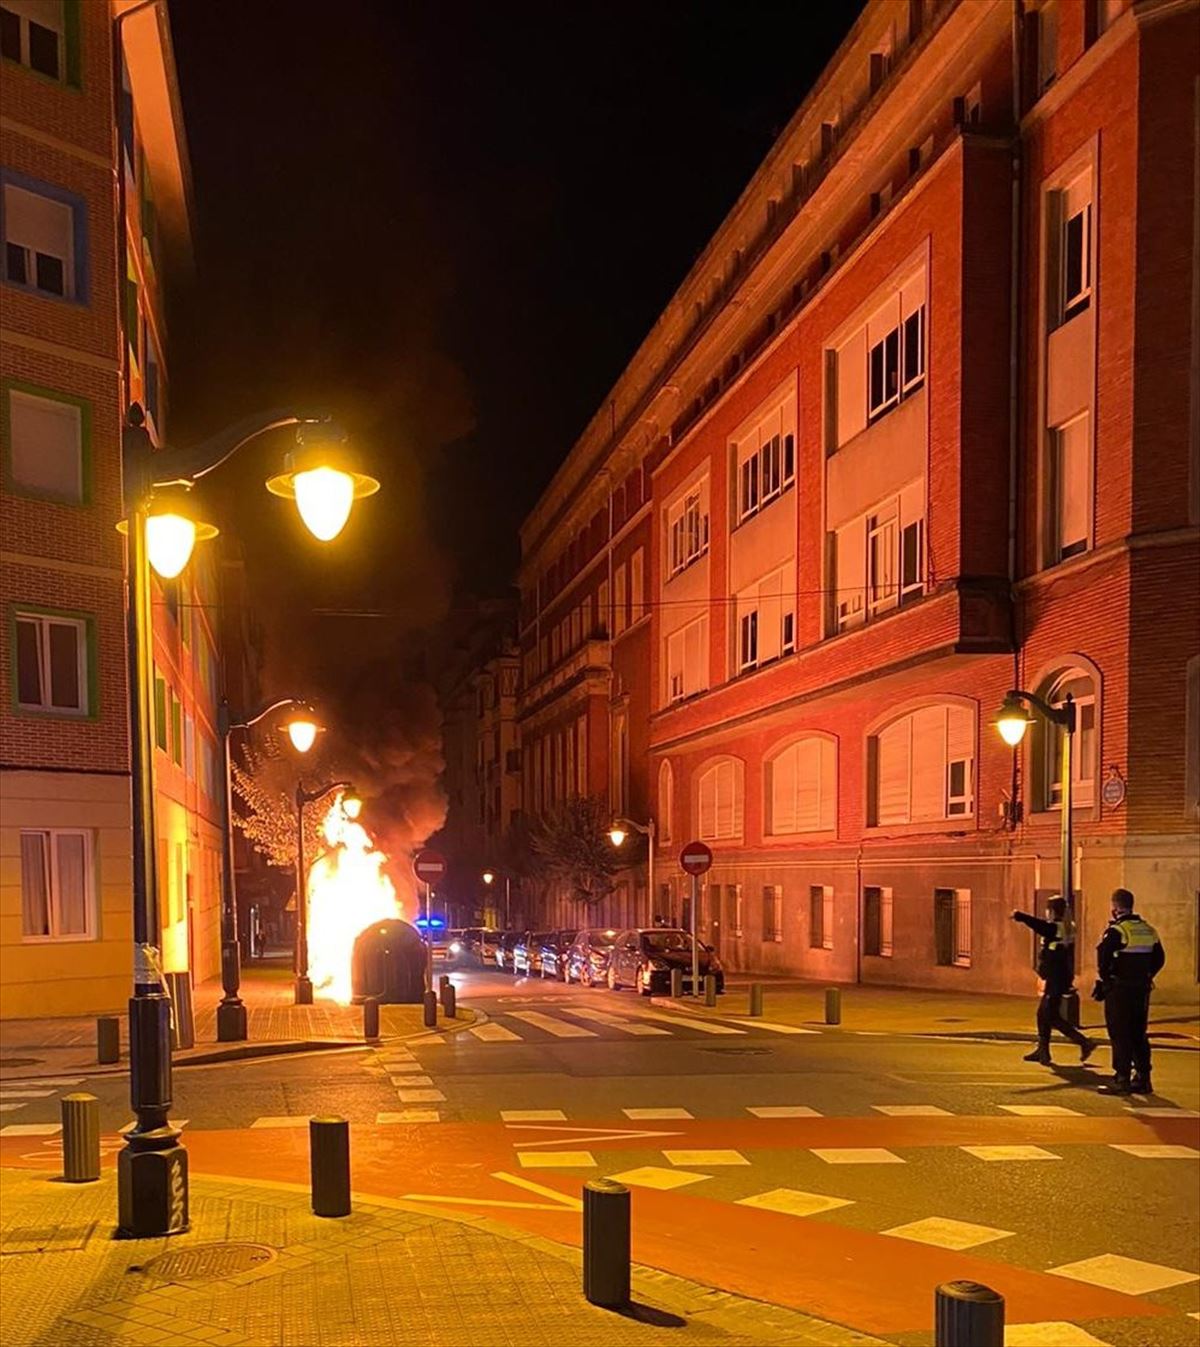 Los manifestantes quemaron varios contenedores.